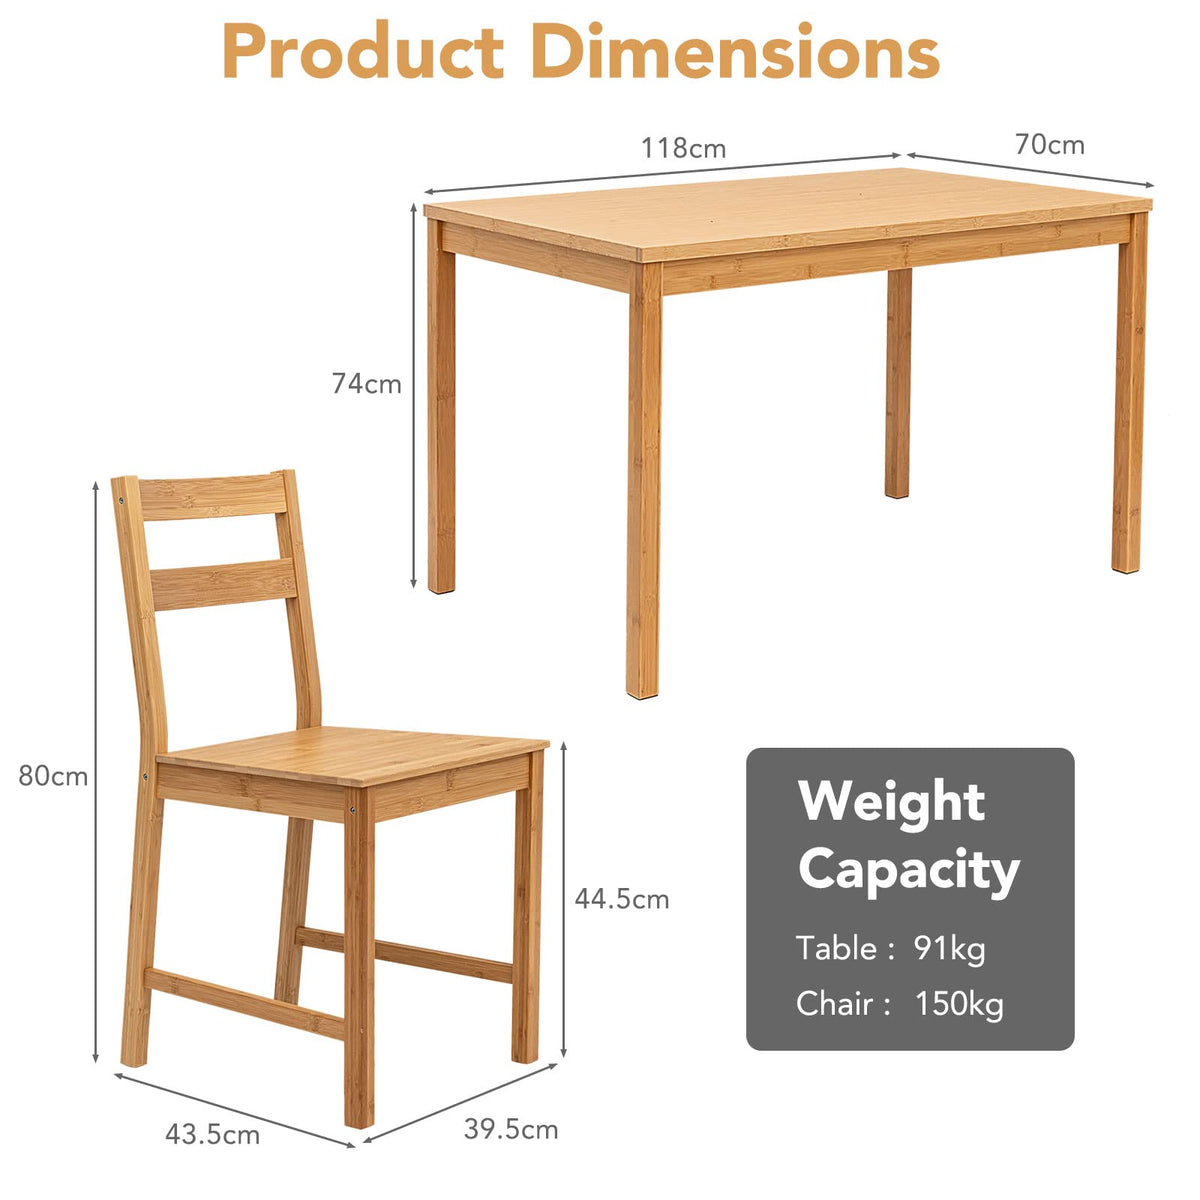 Giantex 5-Piece Dining Set Wooden Kitchen Desk Set w/ 1 Rectangular Table & 4 Chairs Natural